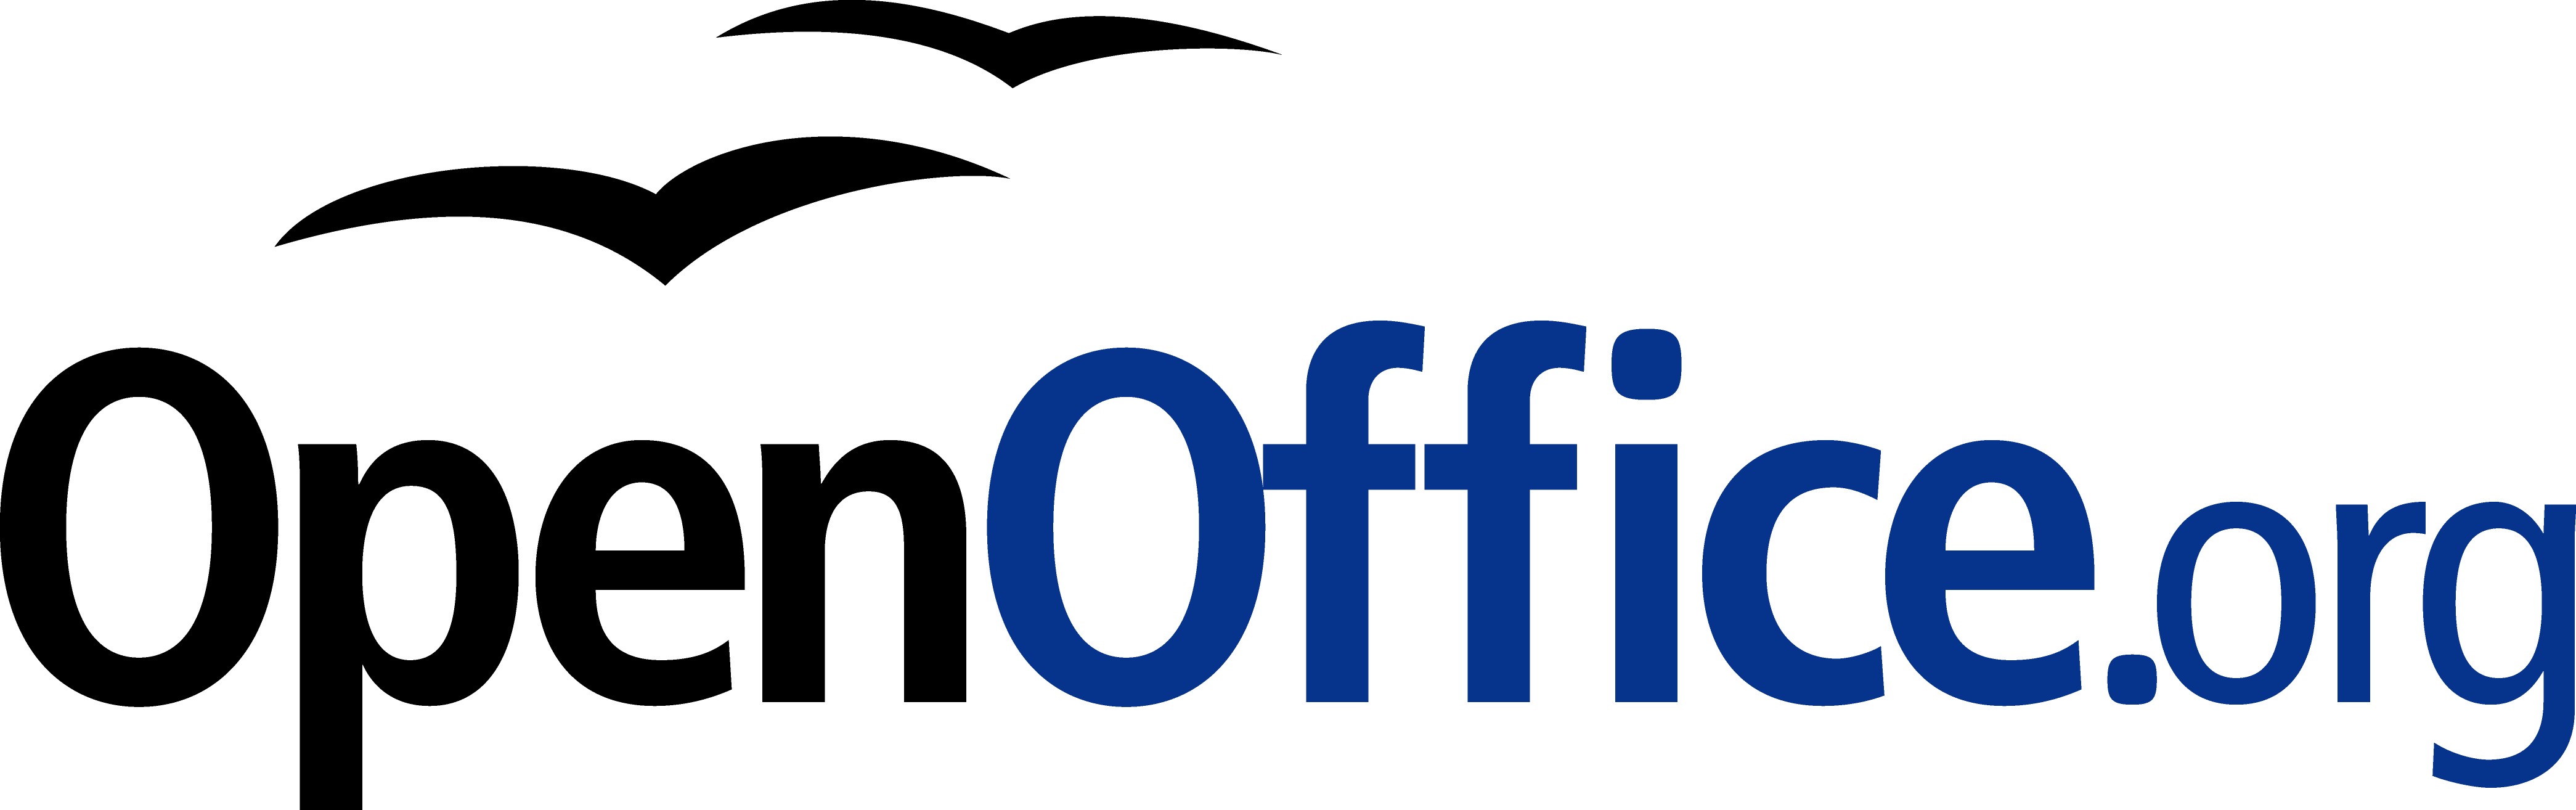 Office Logo - Open Office Writer Logo Png (4180x1314)